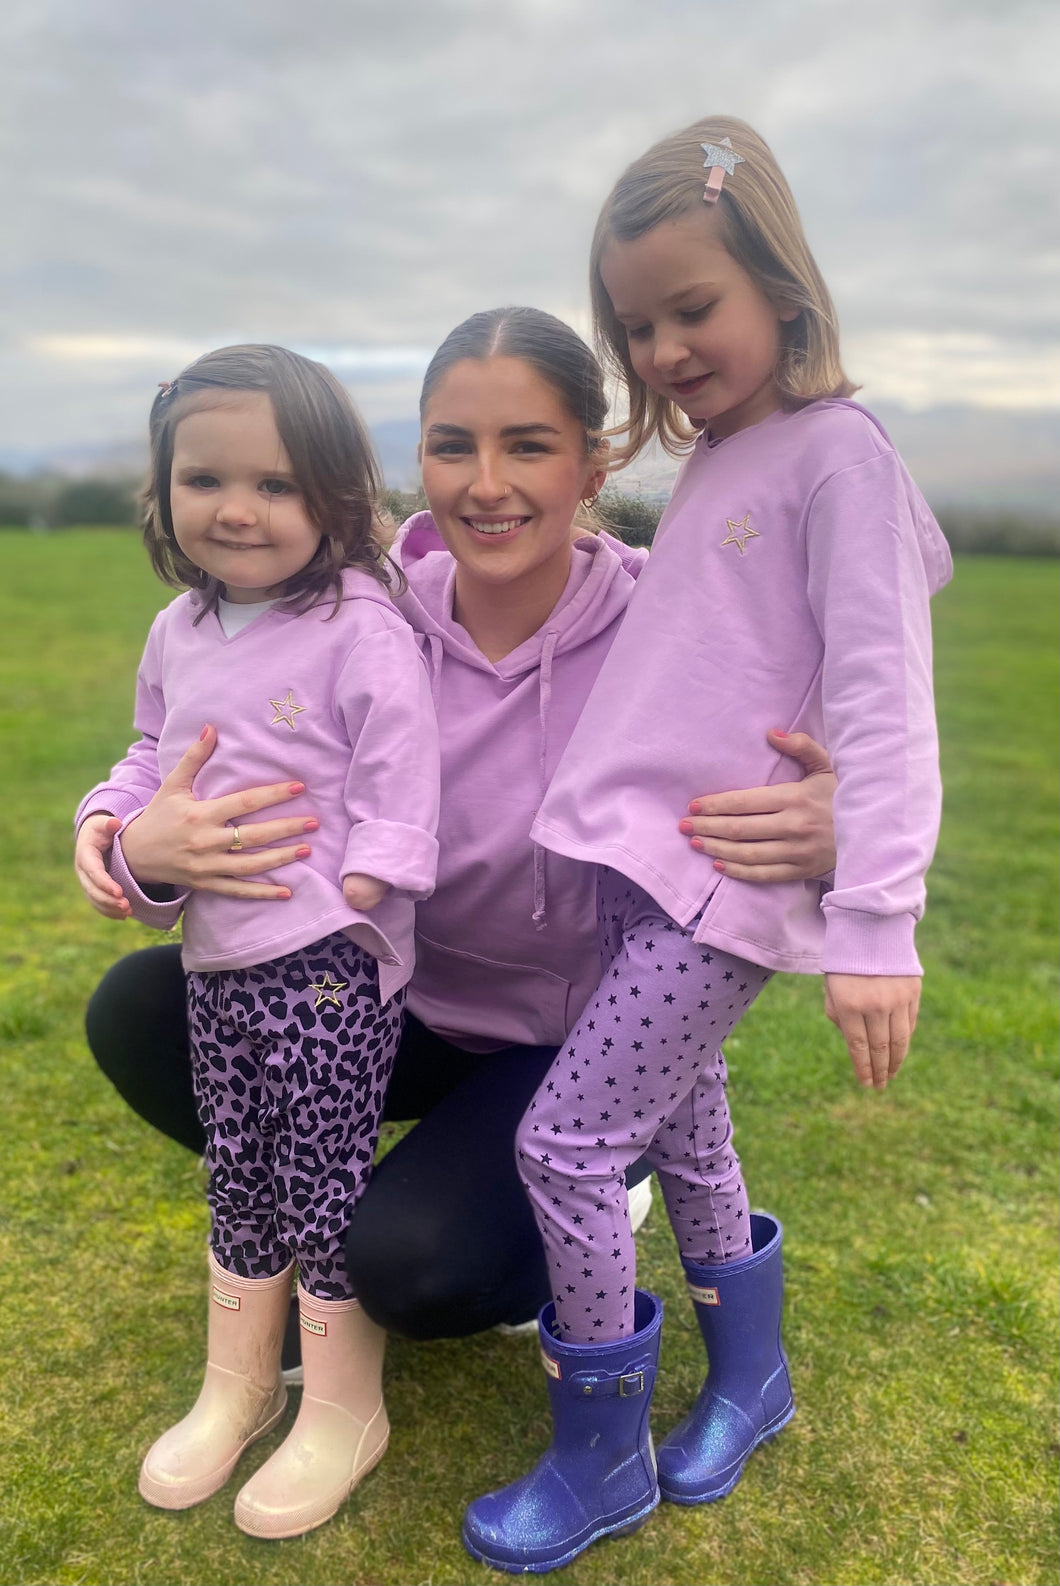 Baby/kids super soft lilac hoodie